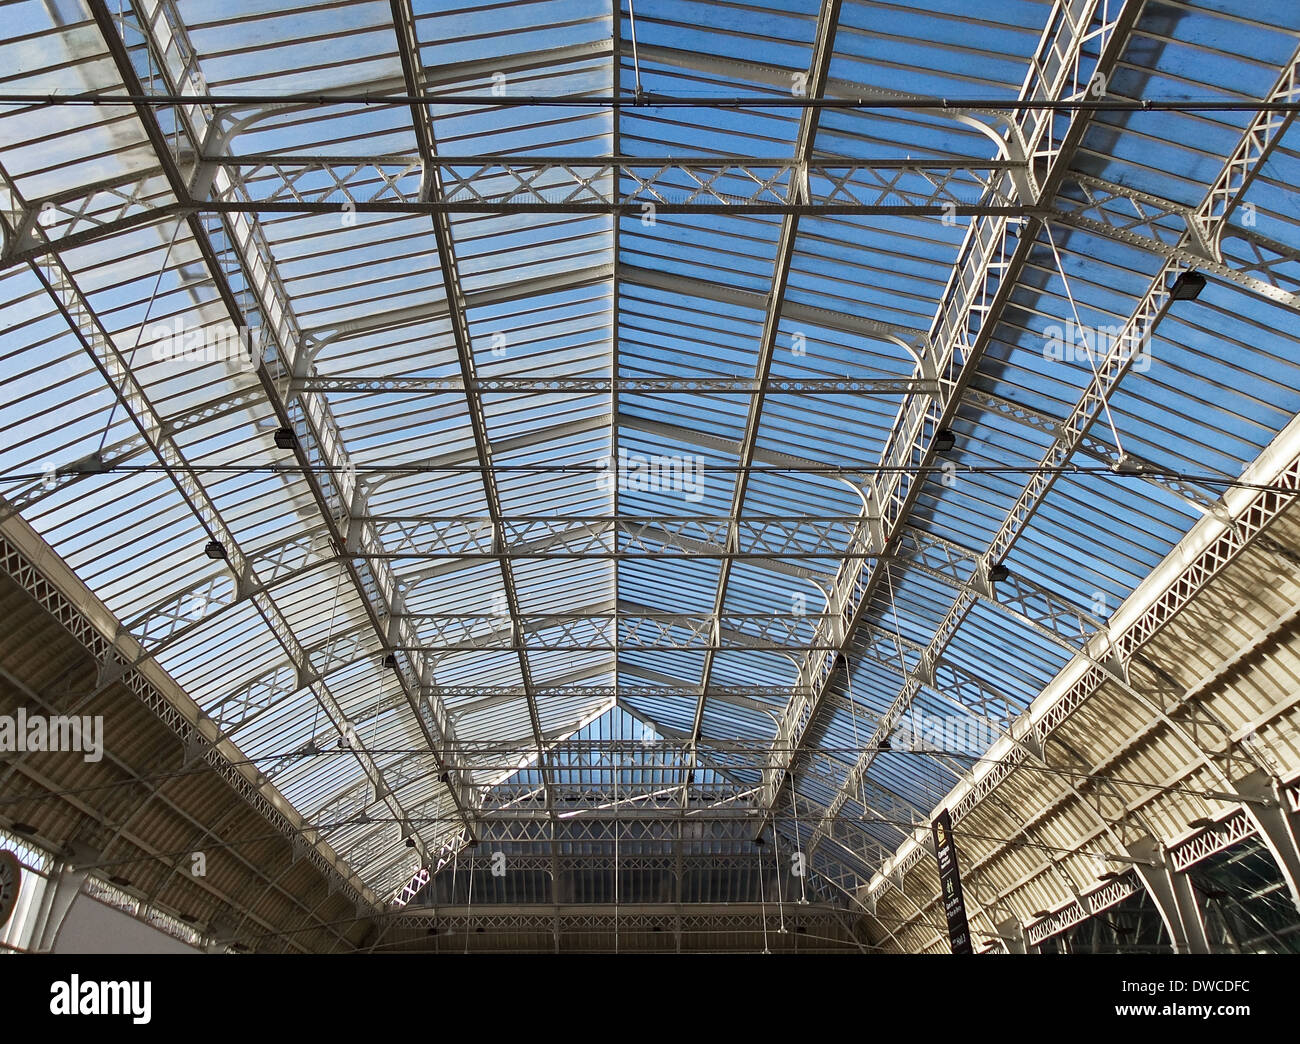 Renovated glass roof - Gare de Lyon, Paris France Stock Photo